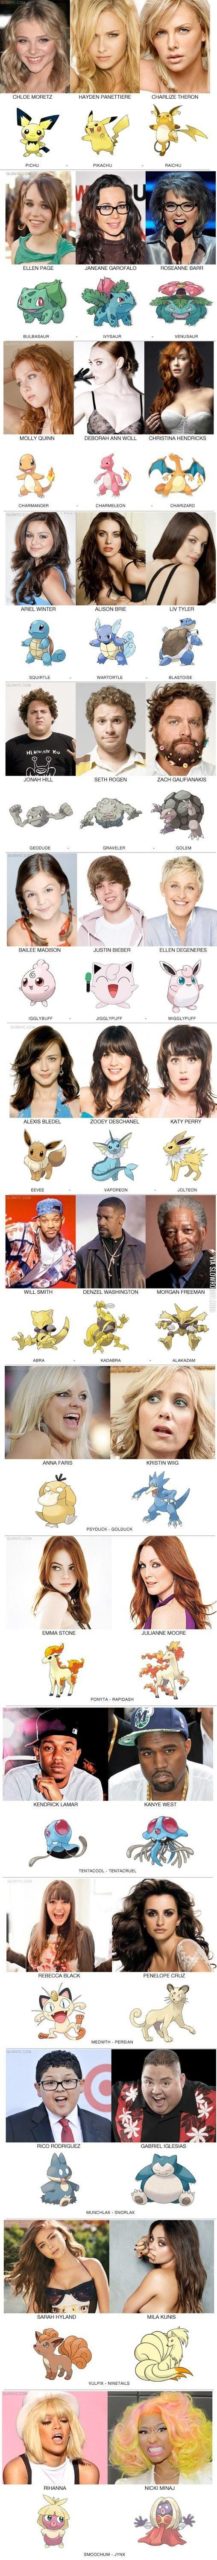 Celebrities+and+their+corresponding+Pokemon.